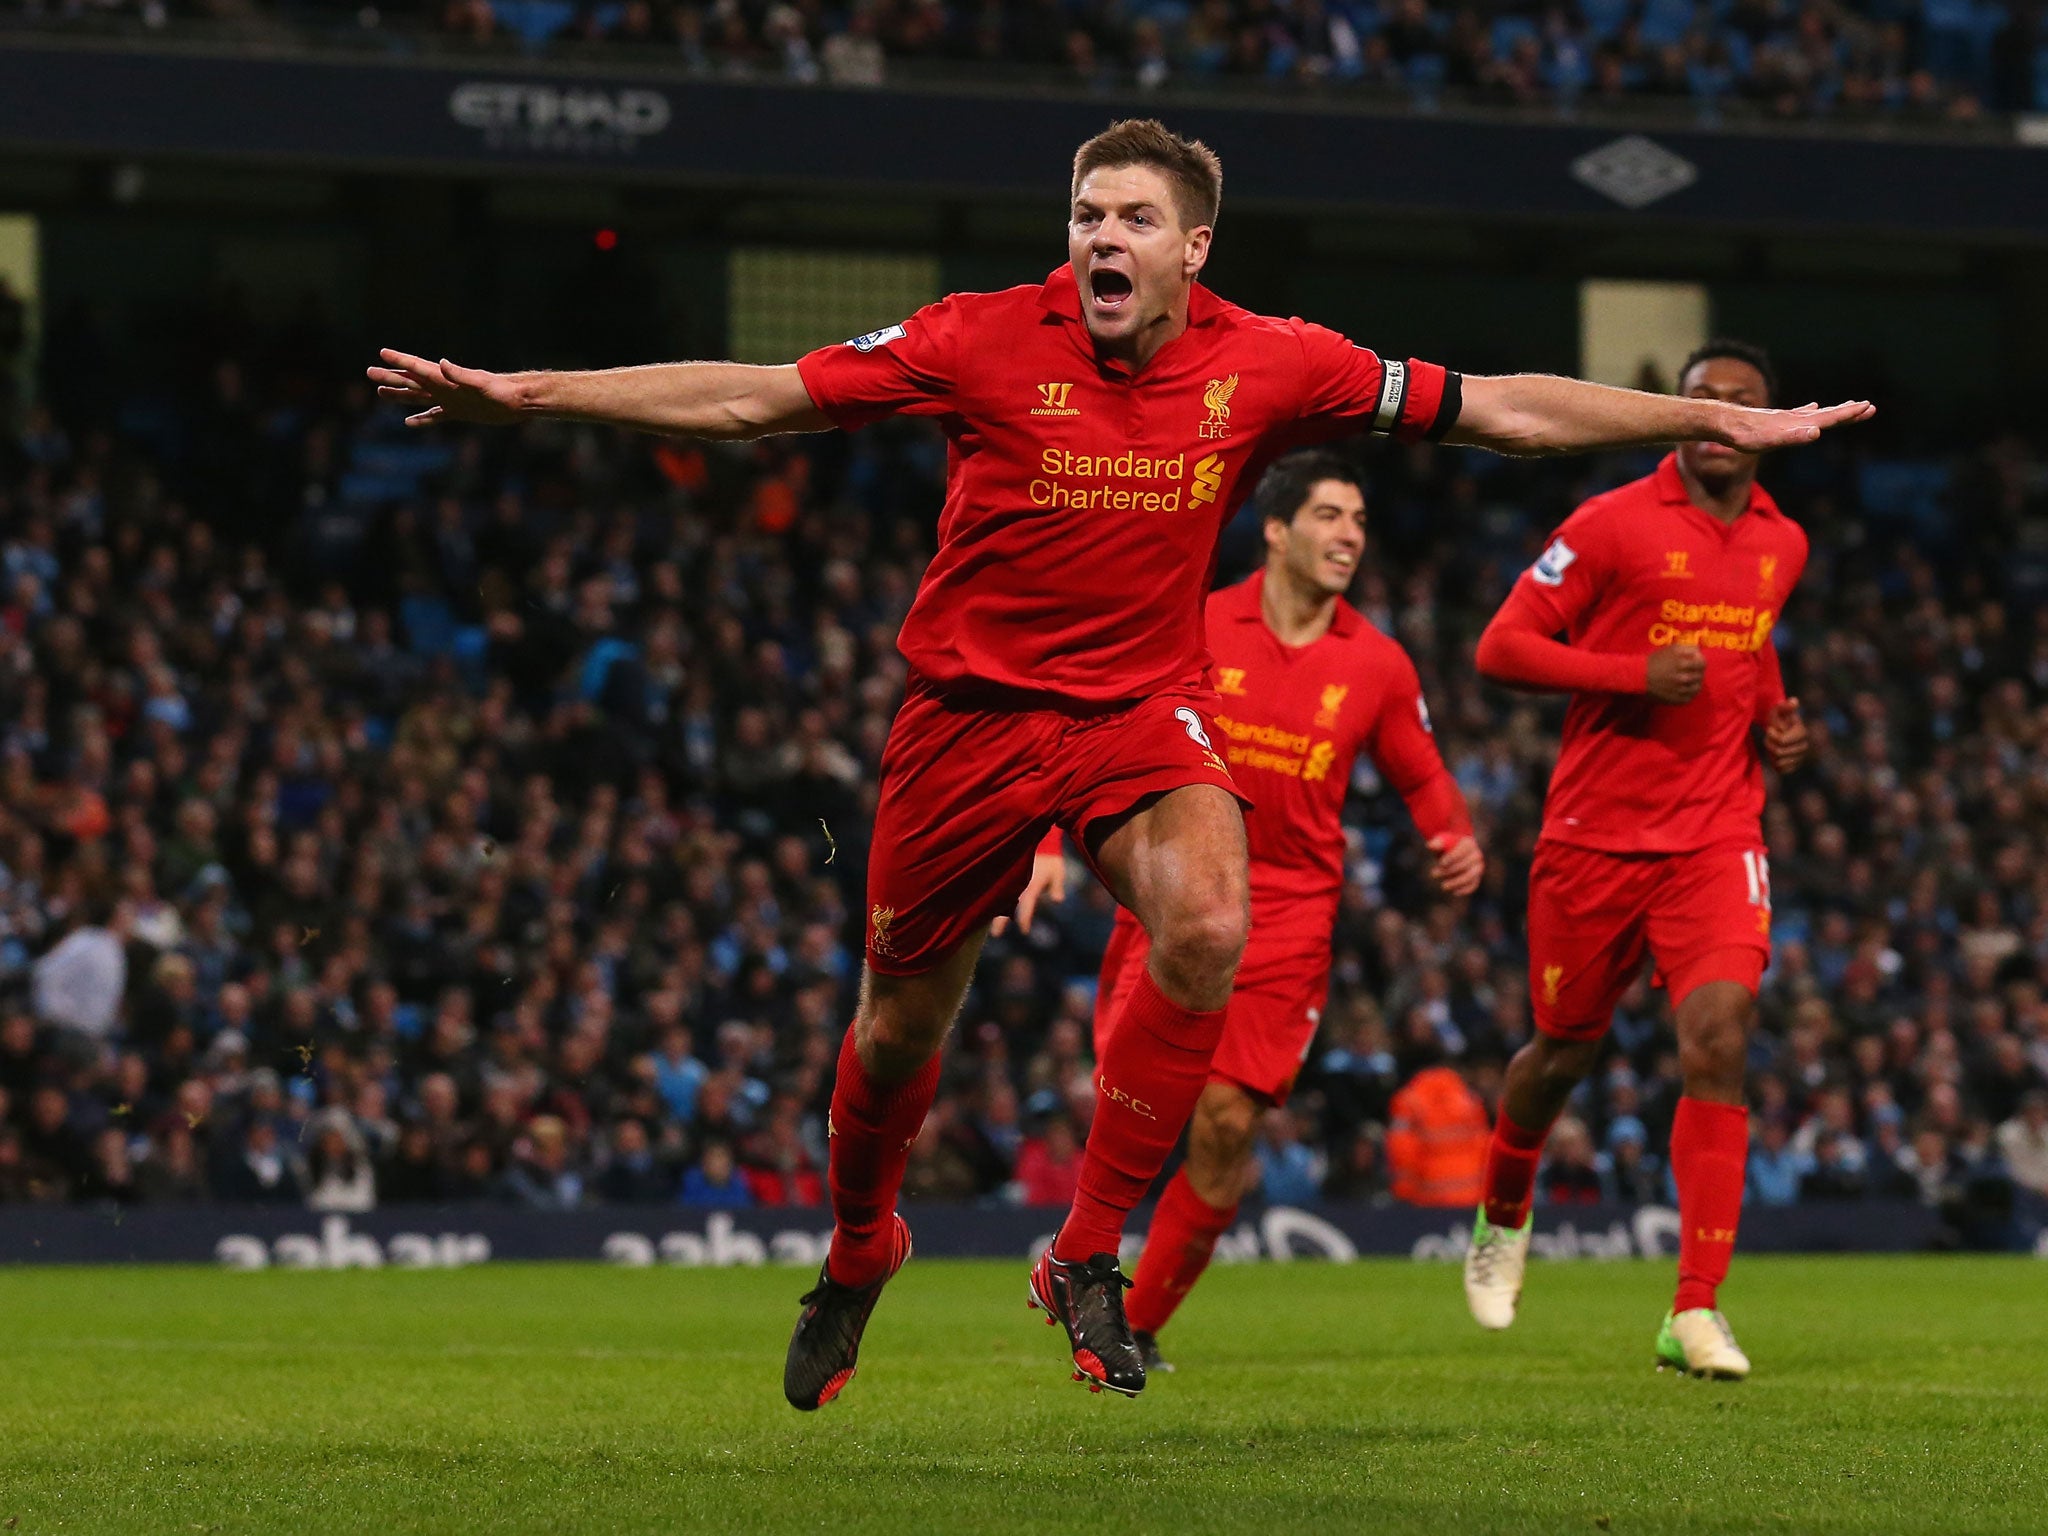 Steven Gerrard of Liverpool celebrates scoring